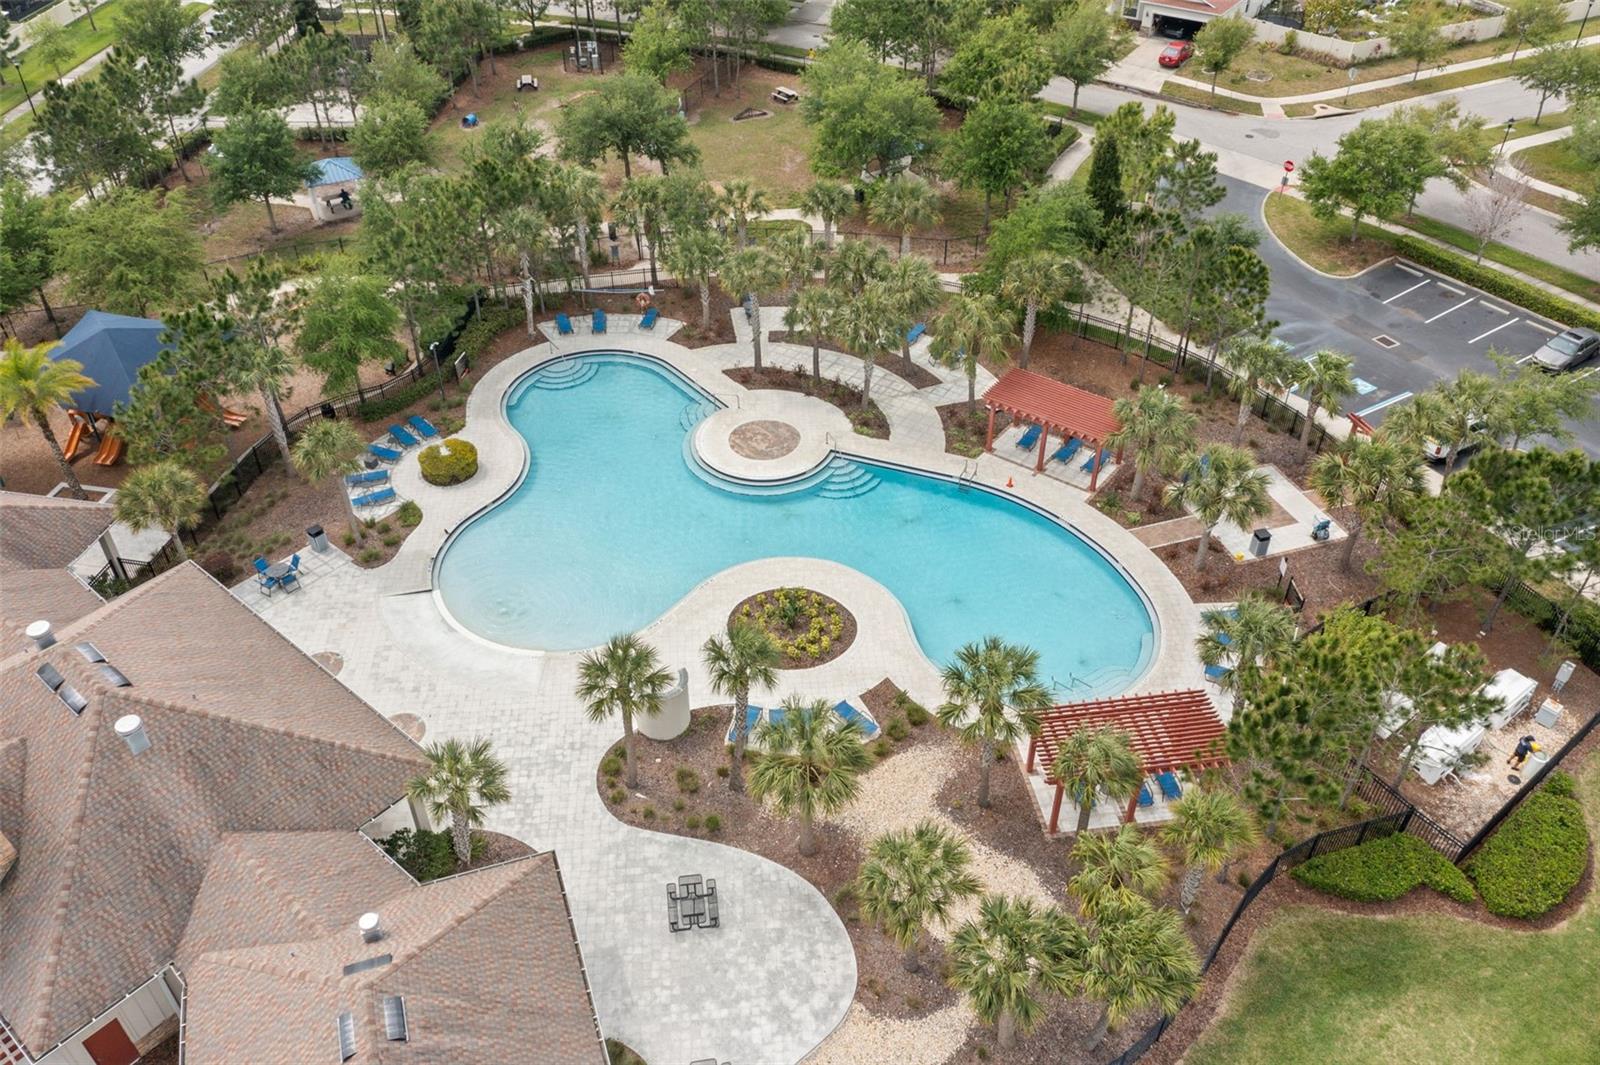 Aerial view of community pool